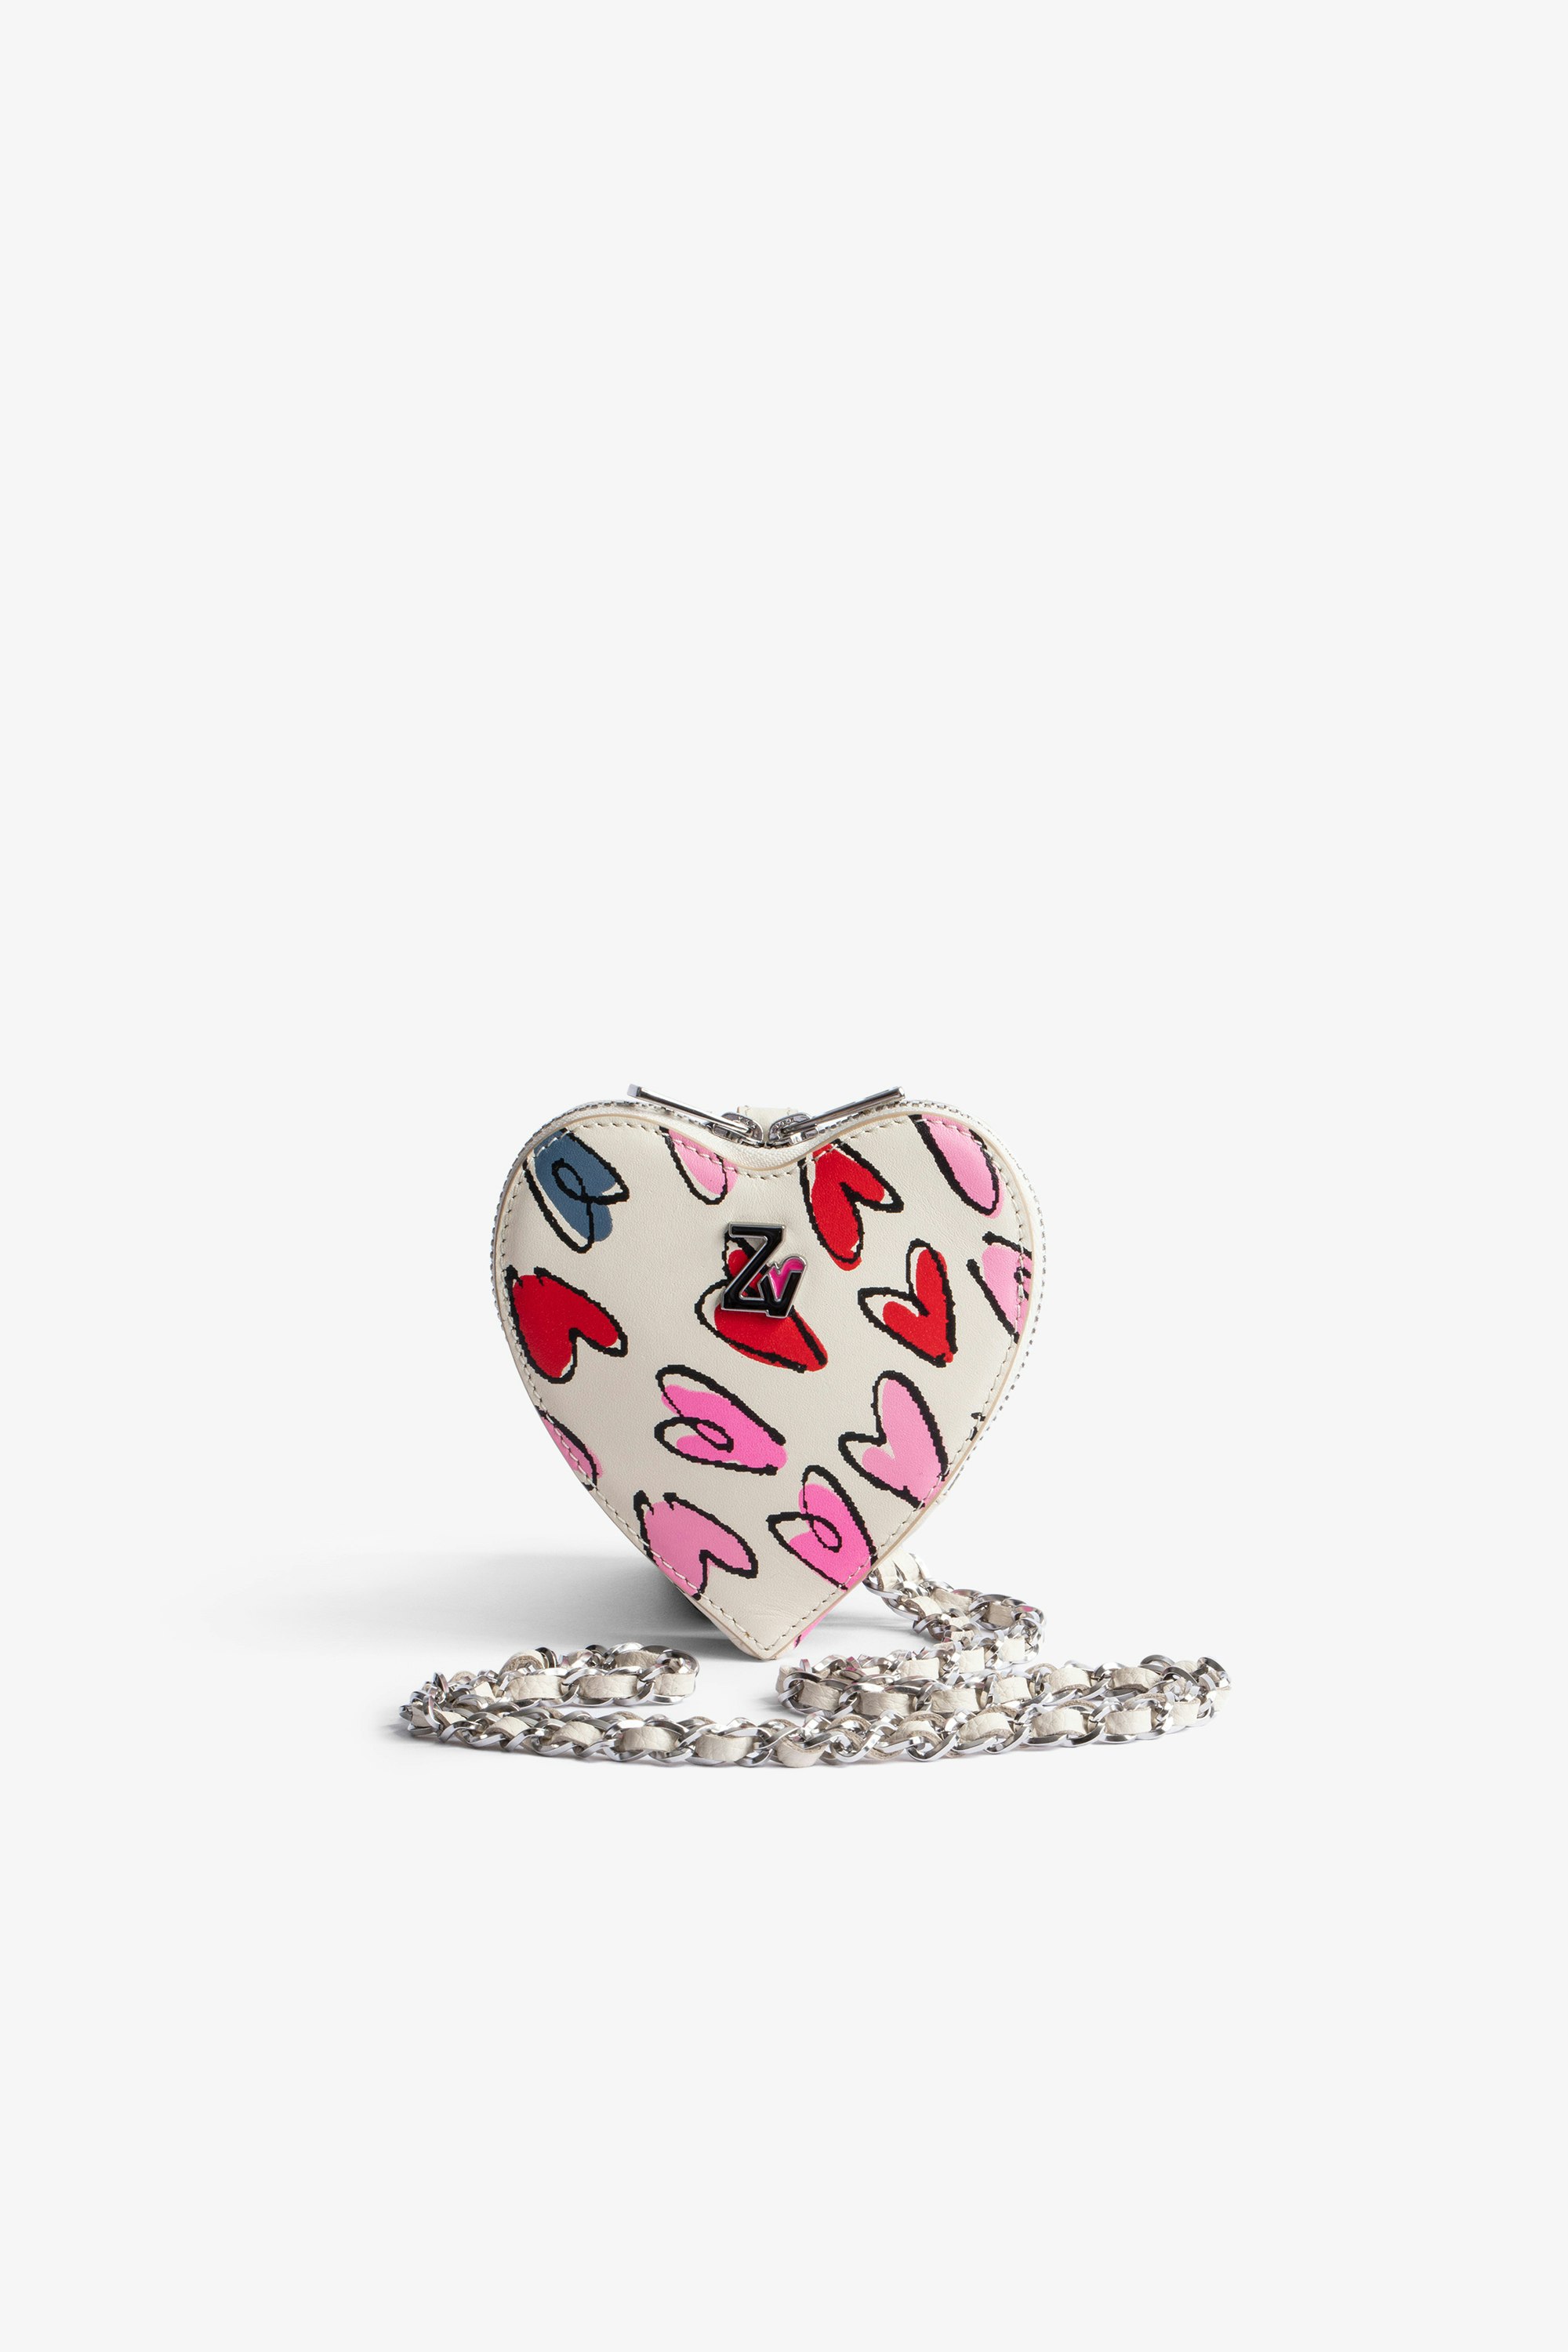 ZV Crush Le Coeur Clutch Women’s small zipped heart clutch with heart motifs